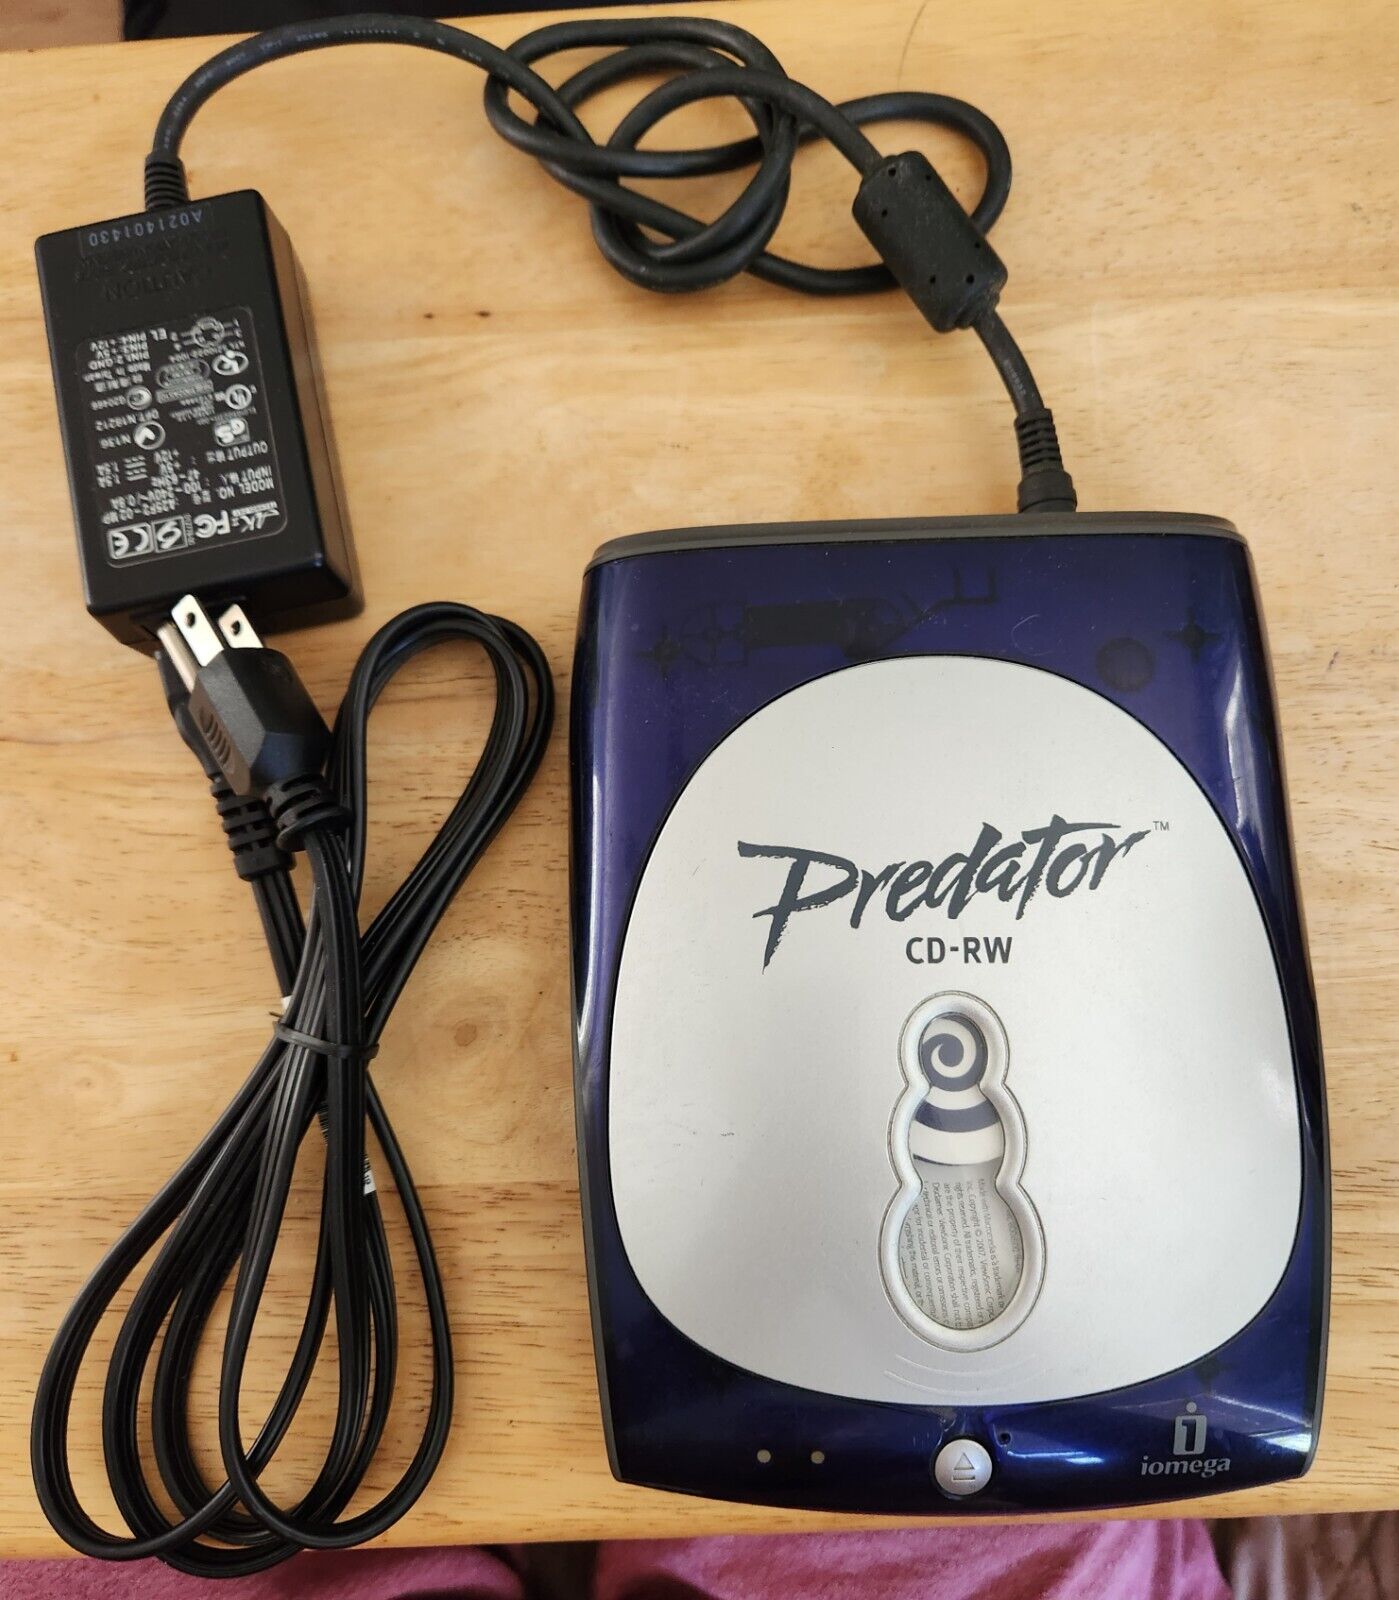 Iomega Predator by Lenova CD-RW CD Creator Burner w/Owner's Manual & All Cables